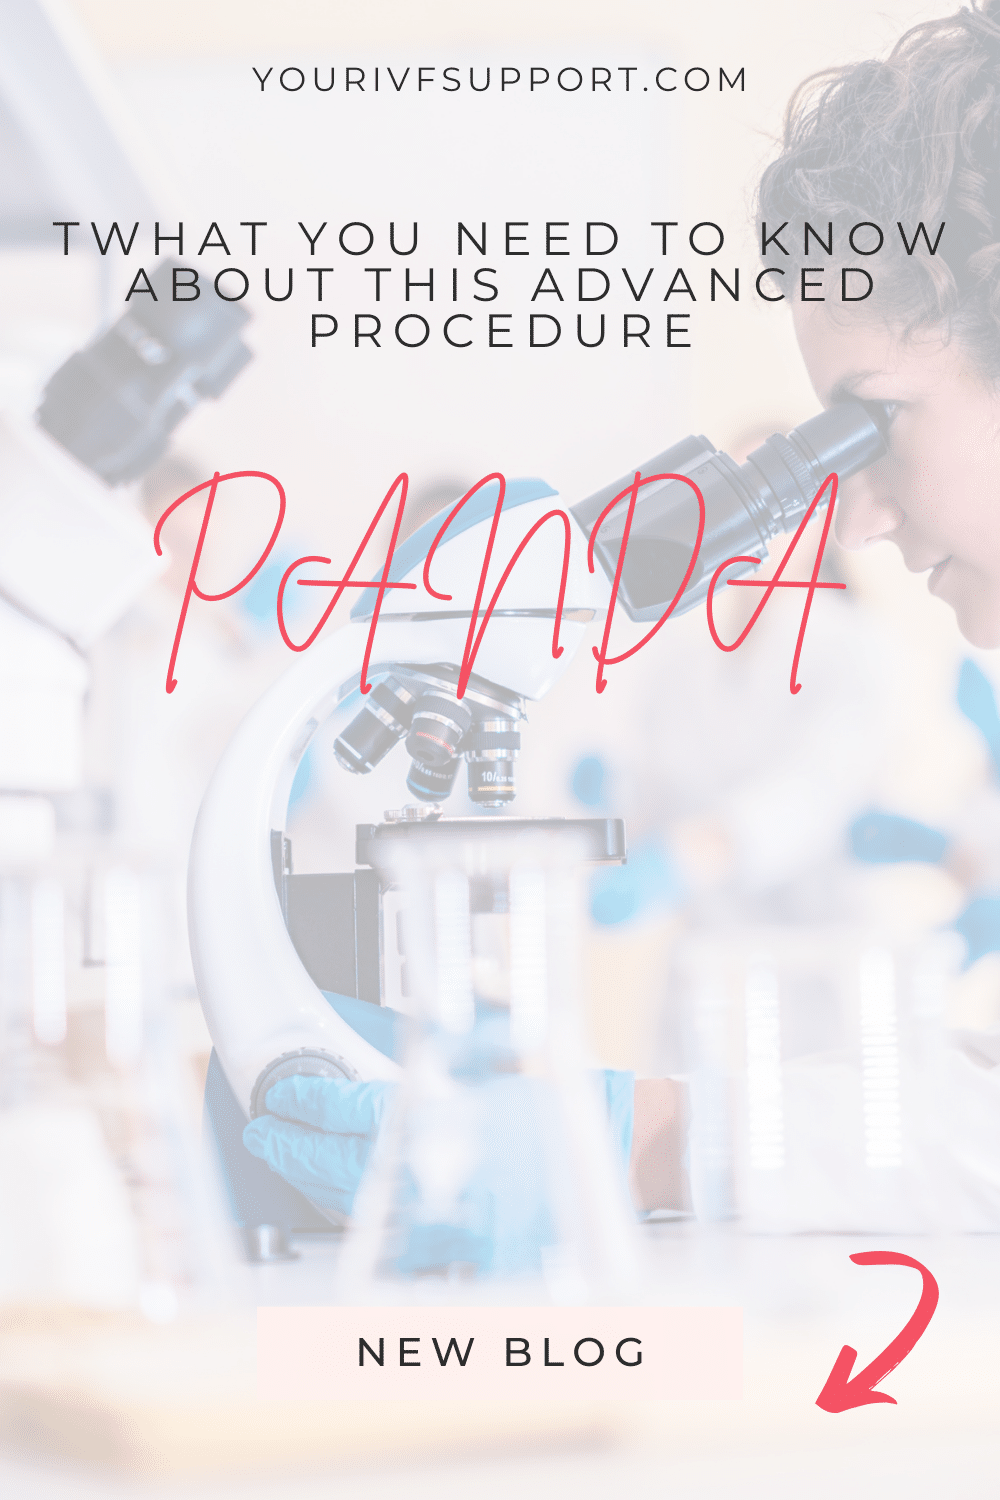 PANDA Test in IVF